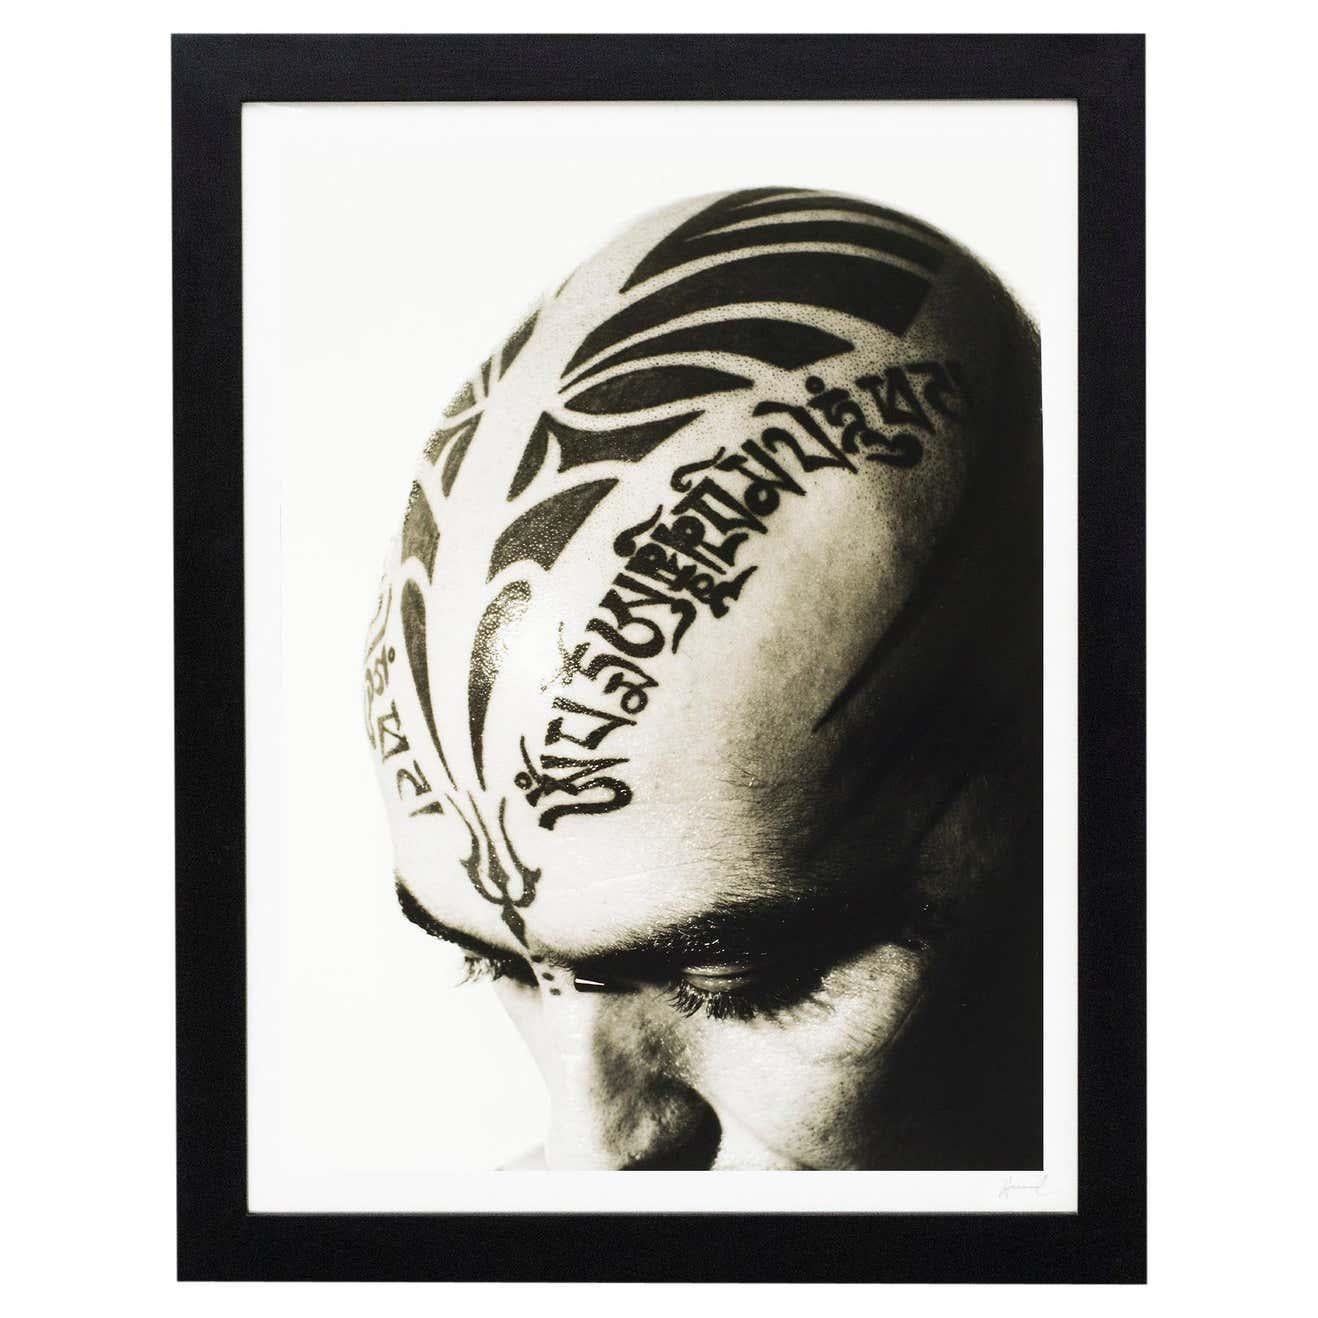 Miquel Arnal Artistic Photograph of a Tattooed Man, circa 1990